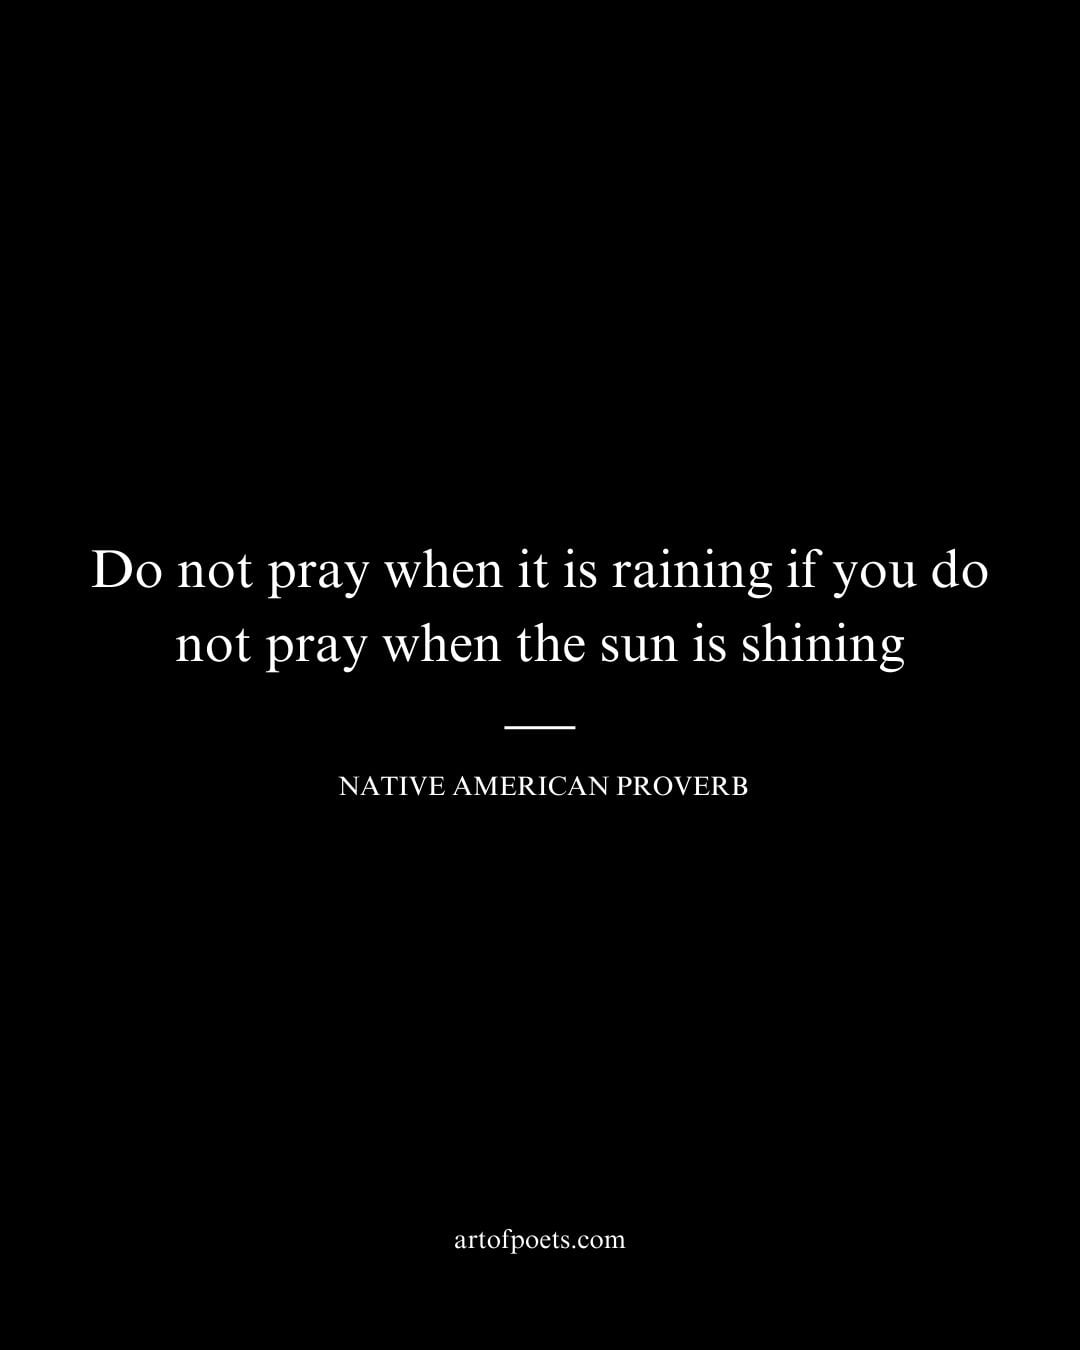 Do not pray when it is raining if you do not pray when the sun is shining